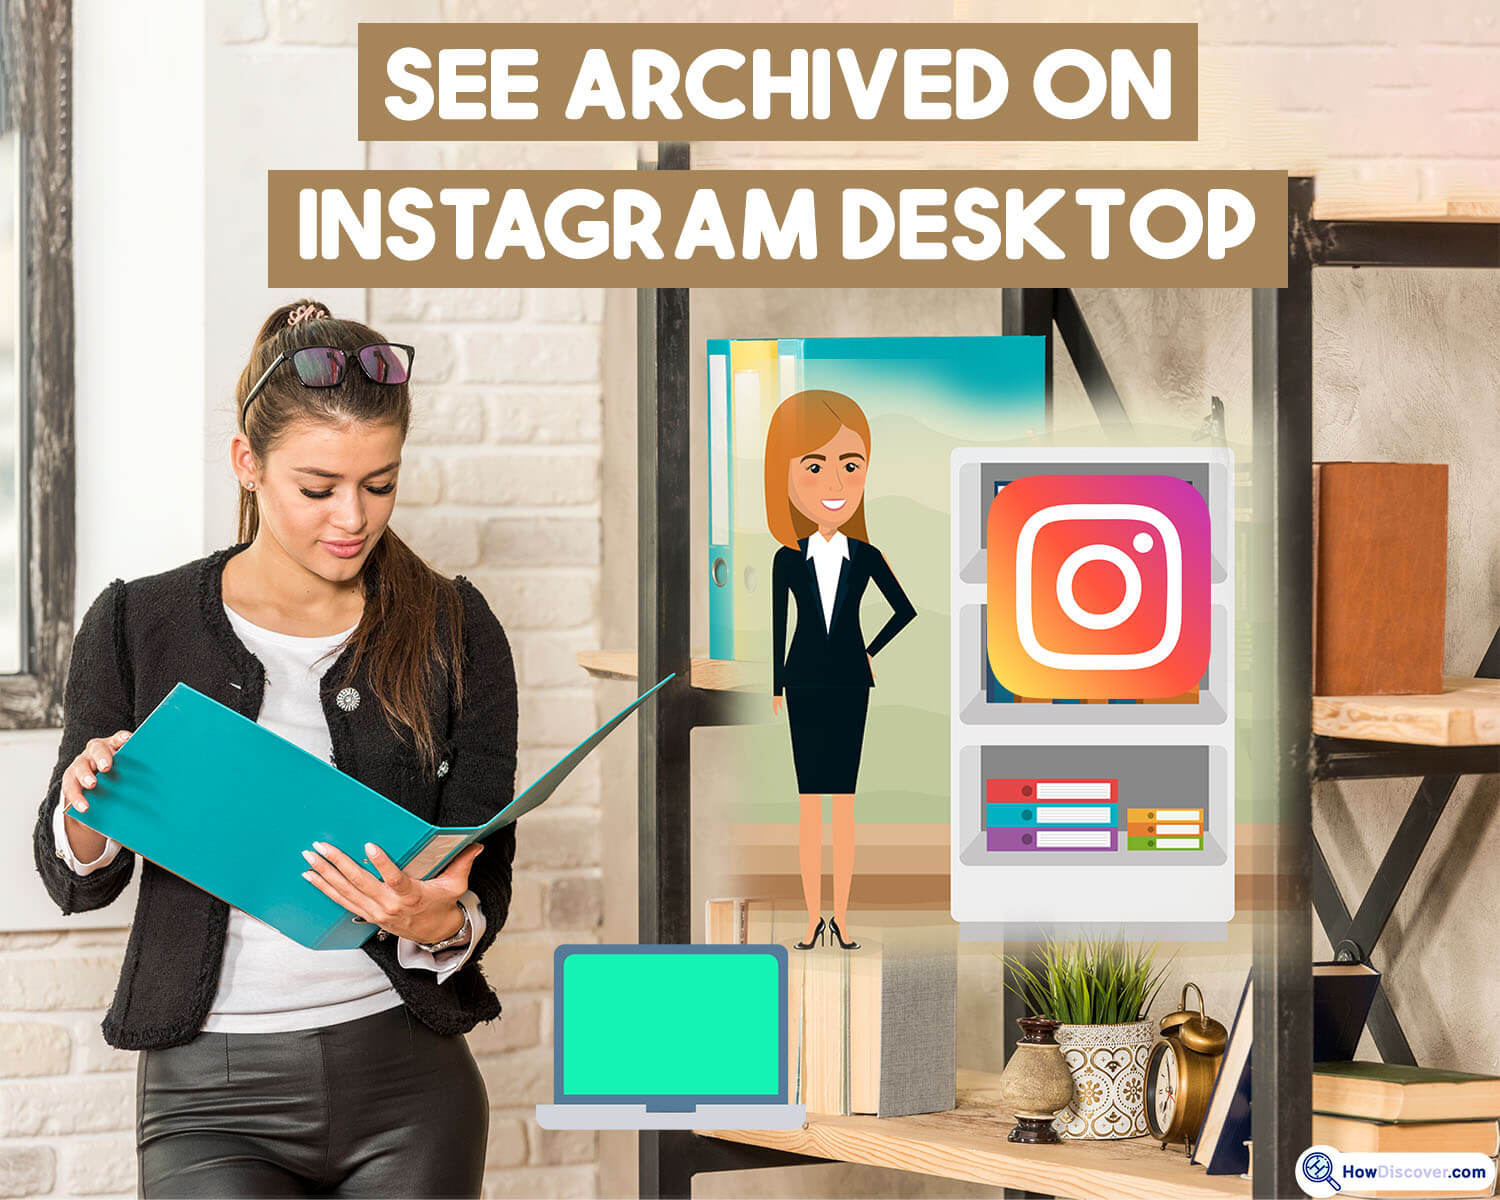 See Archived Stories & posts on Instagram Desktop